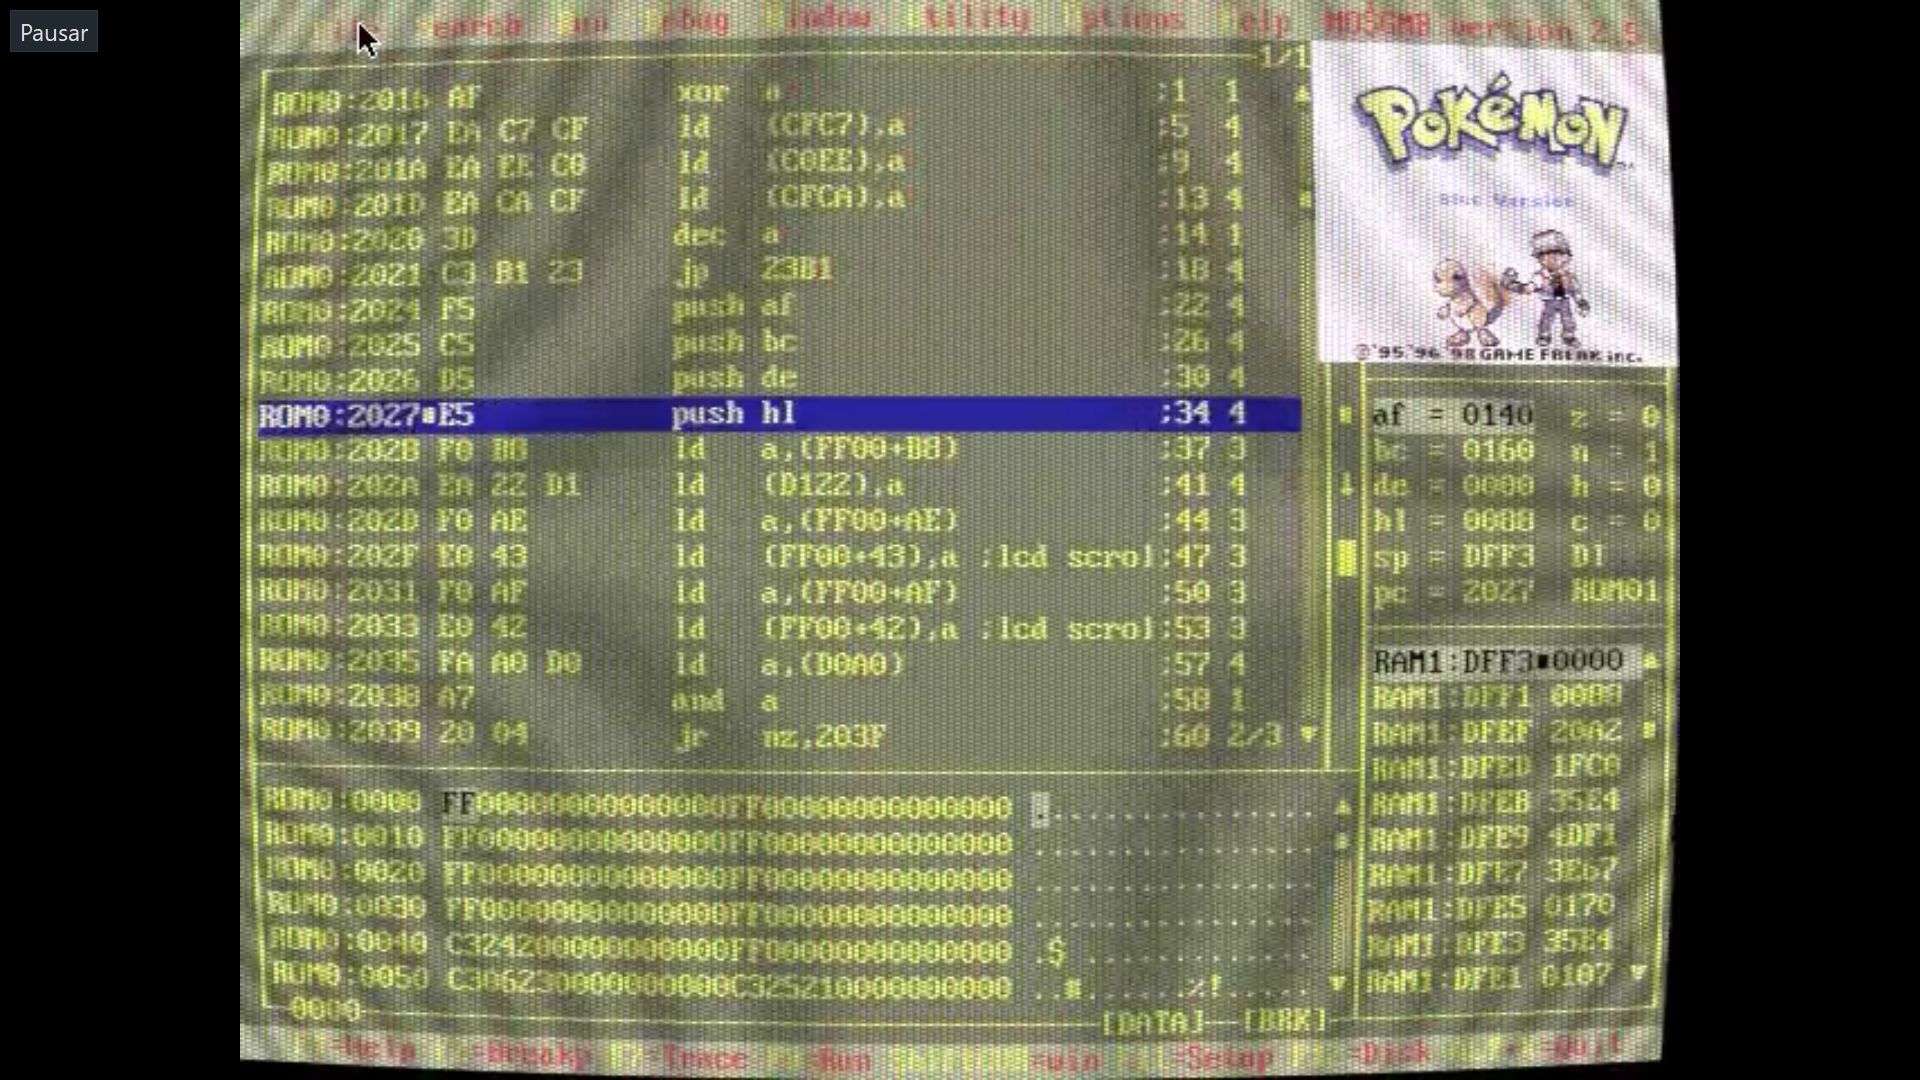 OLD] Windows x32b v2.102.0f file - Pokémon MMO 3D - IndieDB